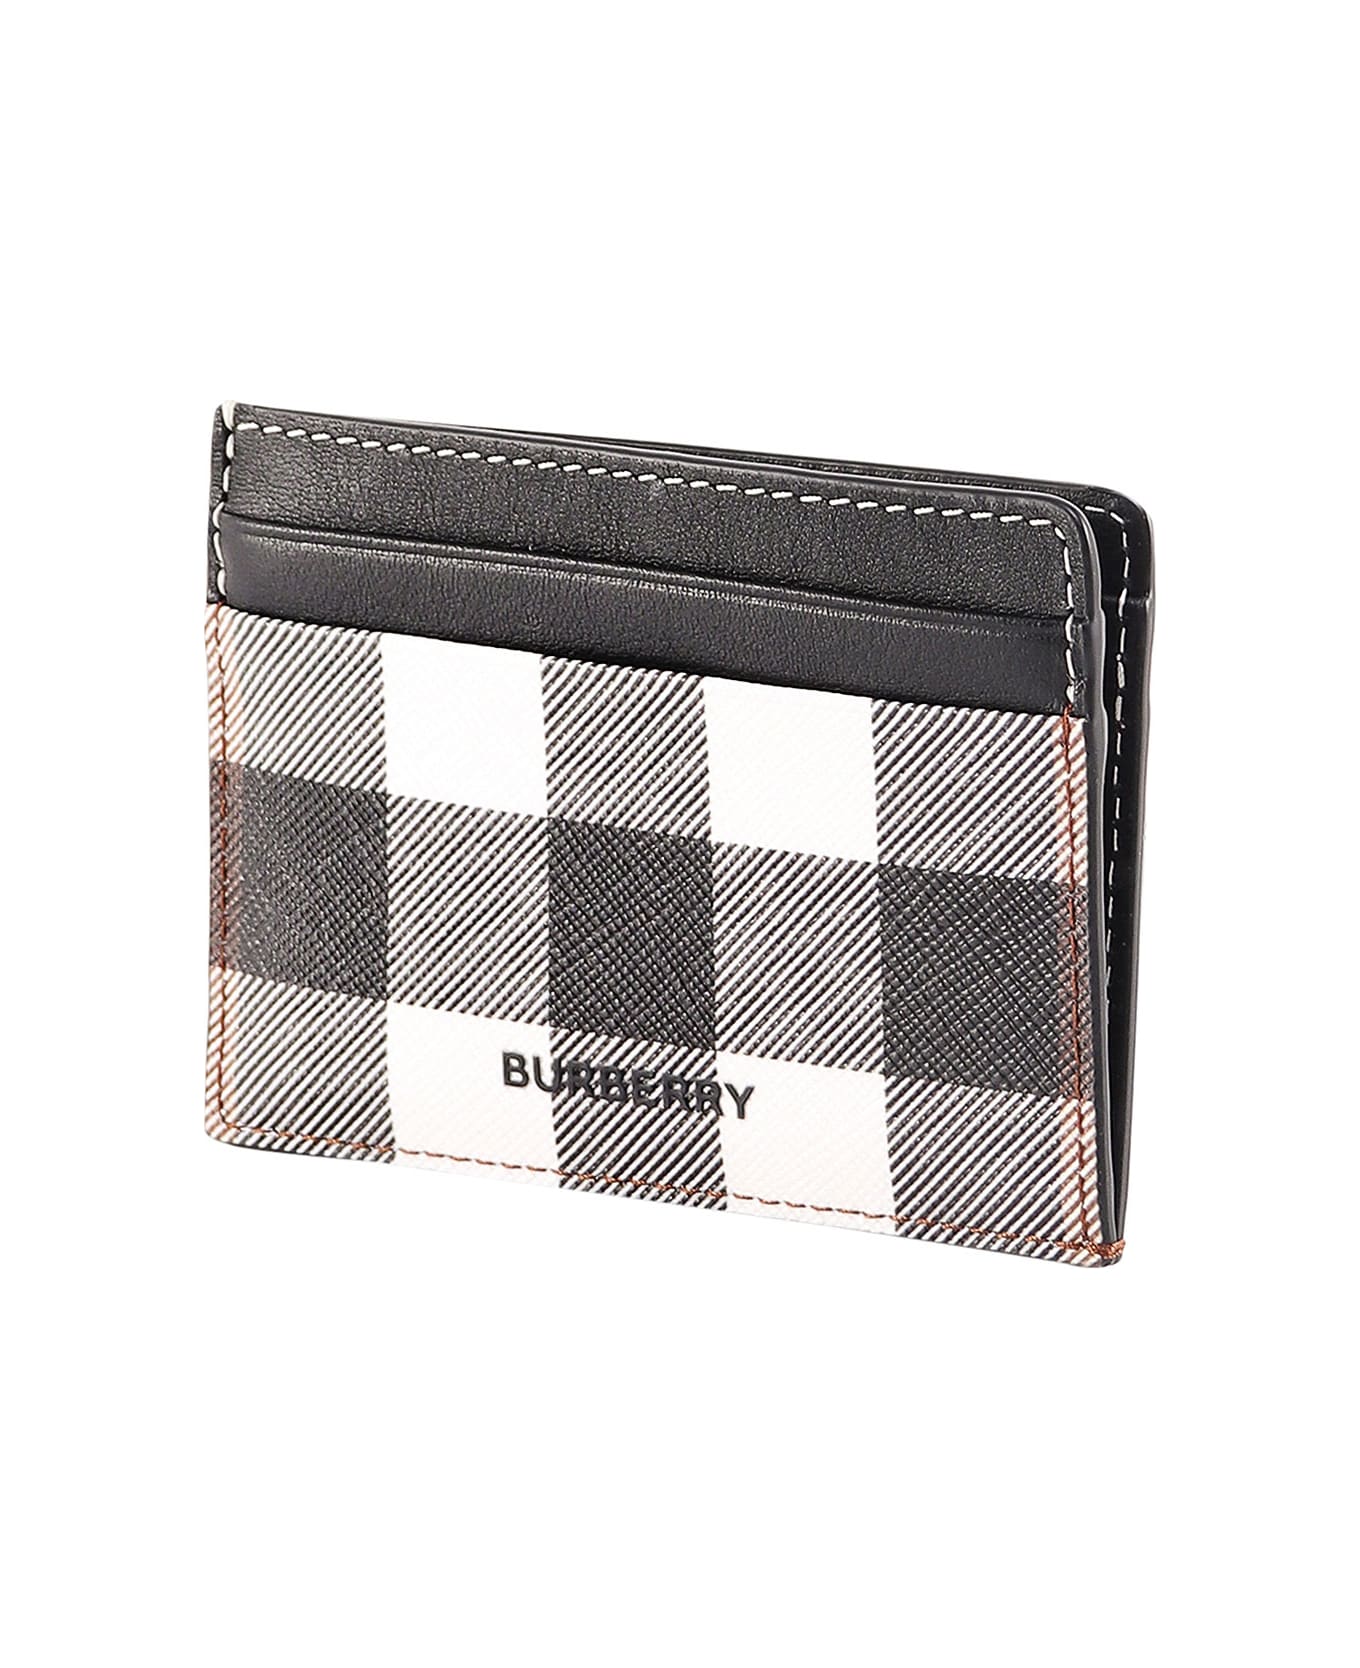 Burberry Card Holder - Black